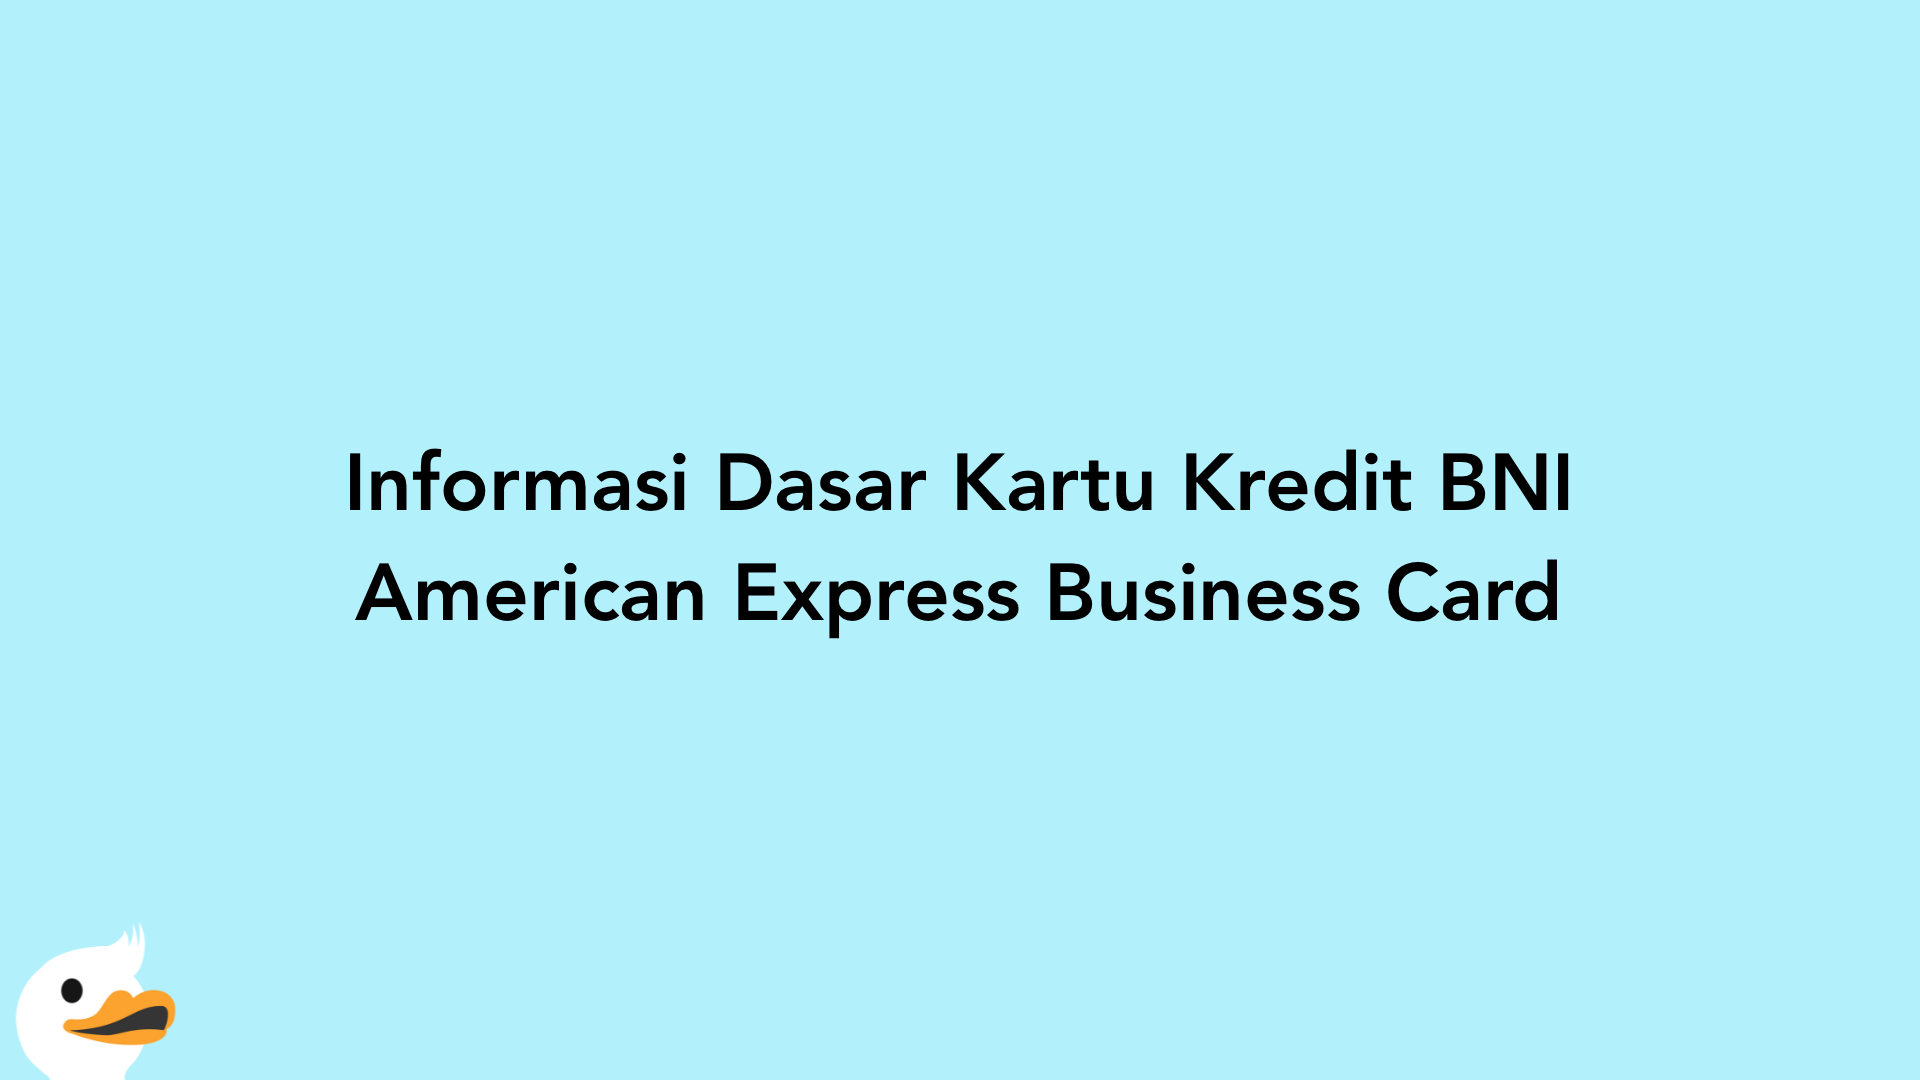 Informasi Dasar Kartu Kredit BNI American Express Business Card